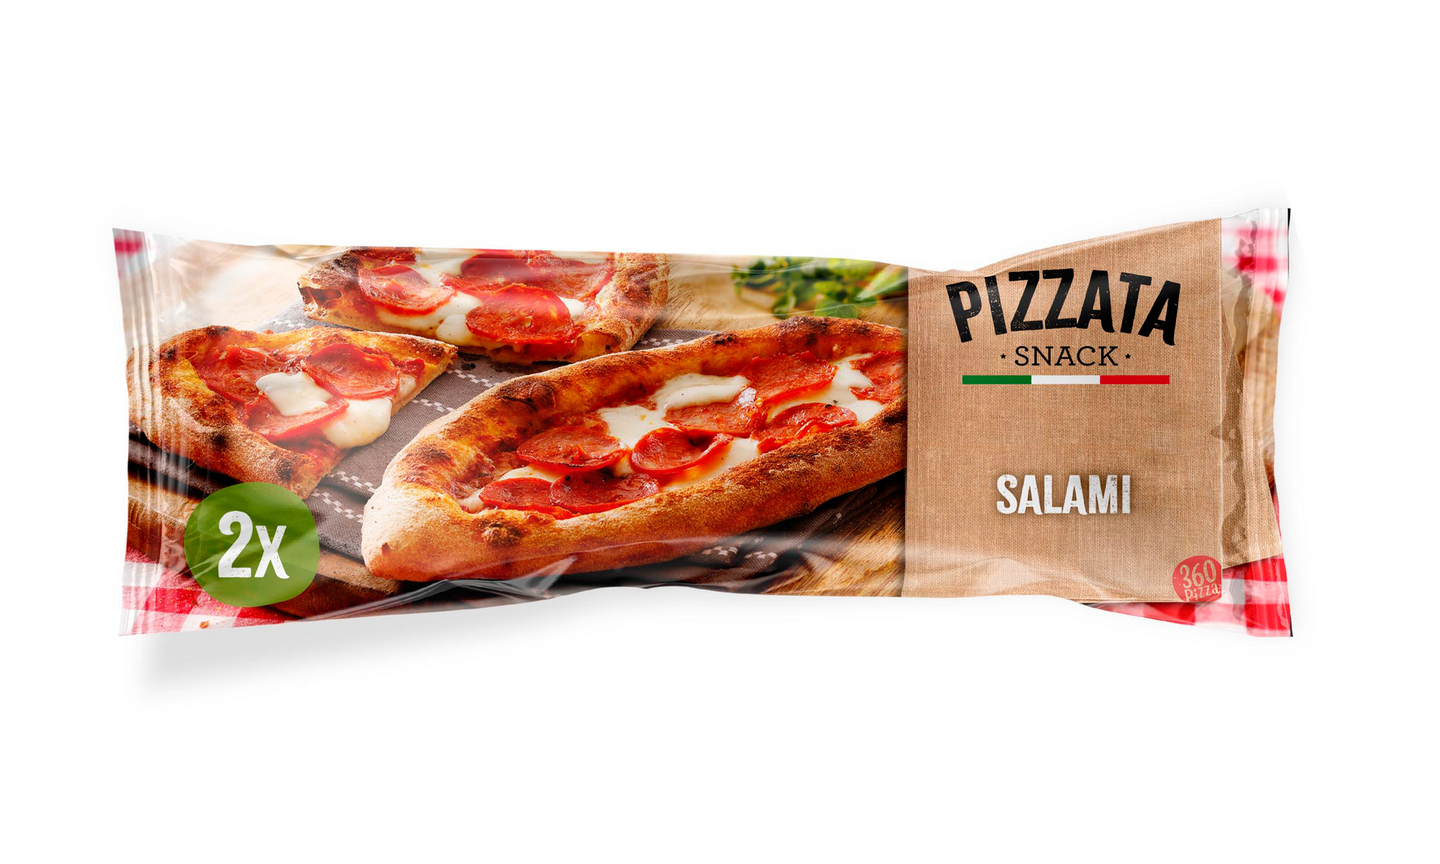 Europicnic pizzatta salami 2x115g pakaste